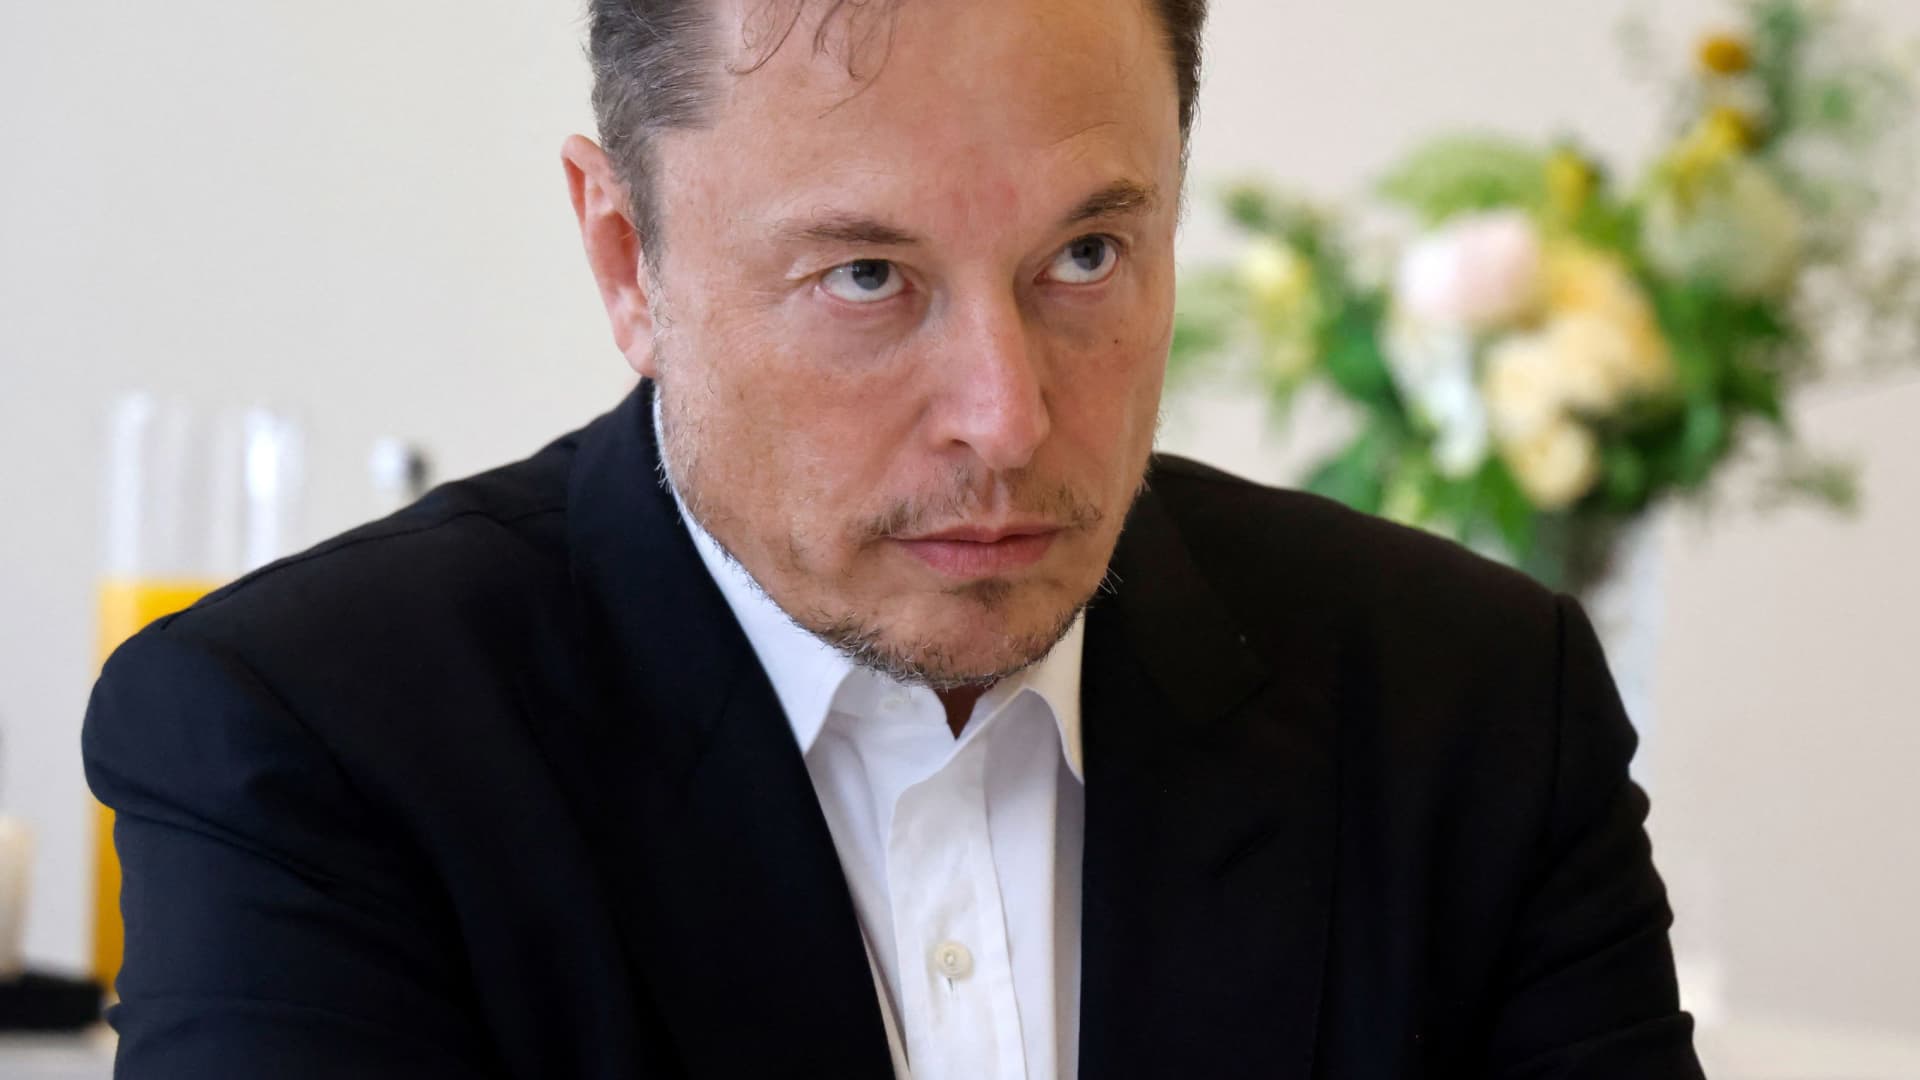 Elon Musk faces subpoena in Jeffrey Epstein lawsuit against JPMorgan